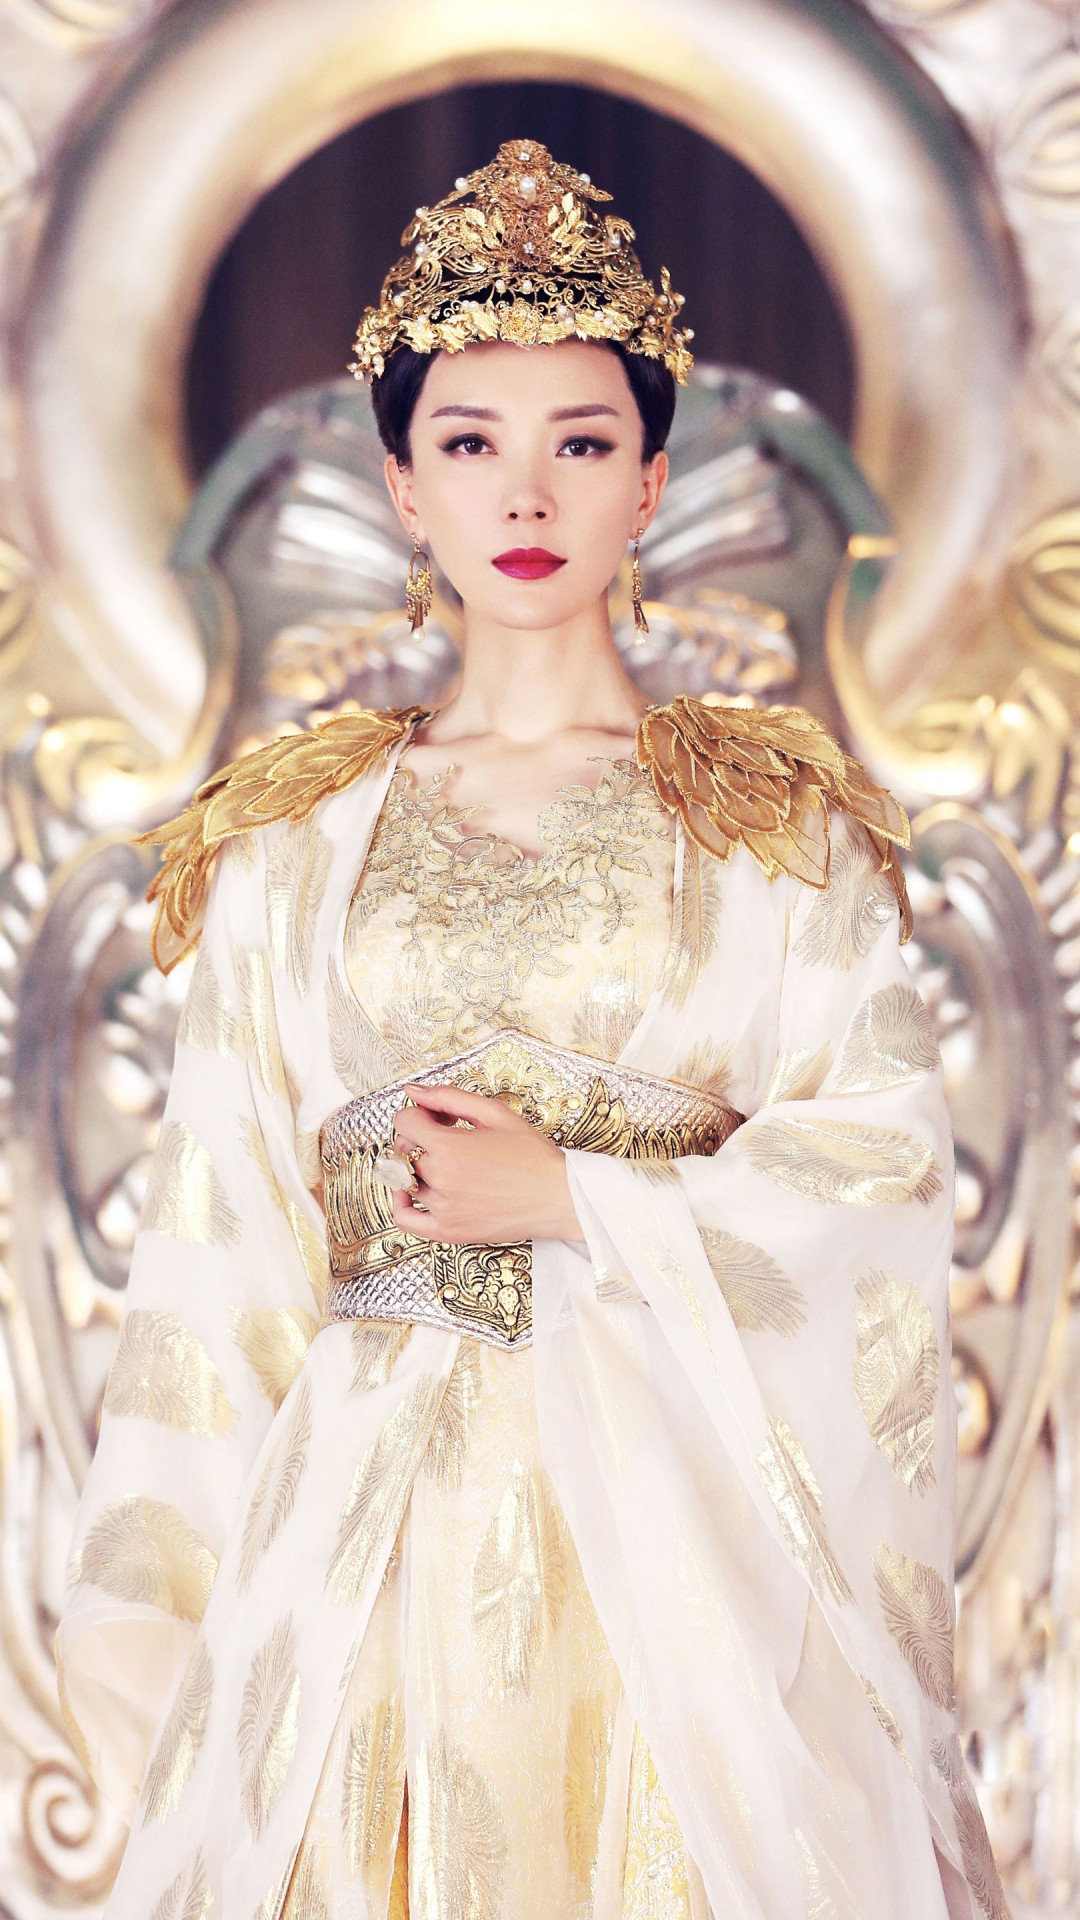 Empress of china costumes